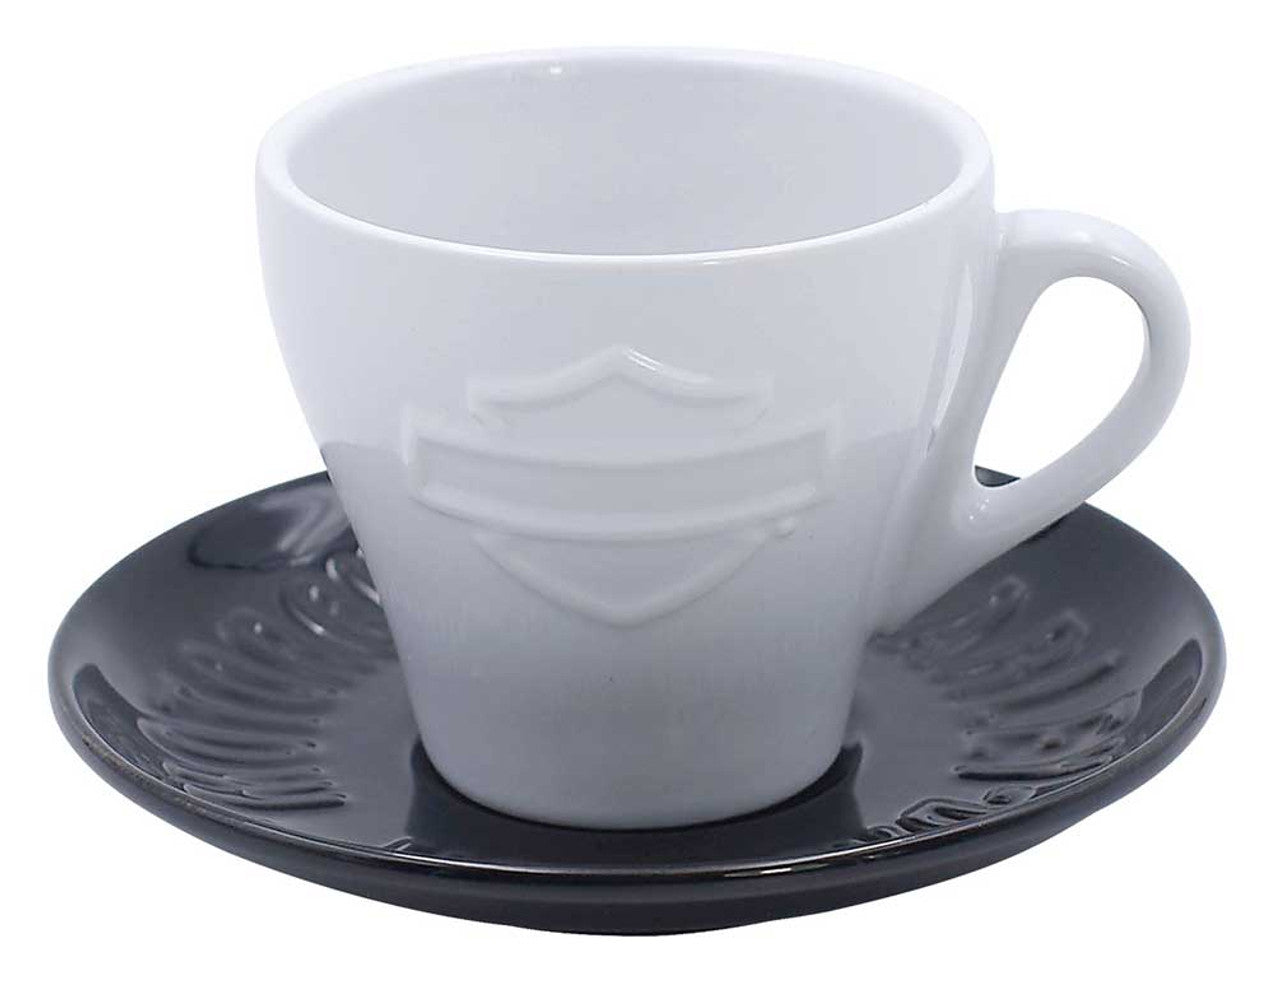 B&S Silhouette Bar & Shield Ceramic Cup & Saucer